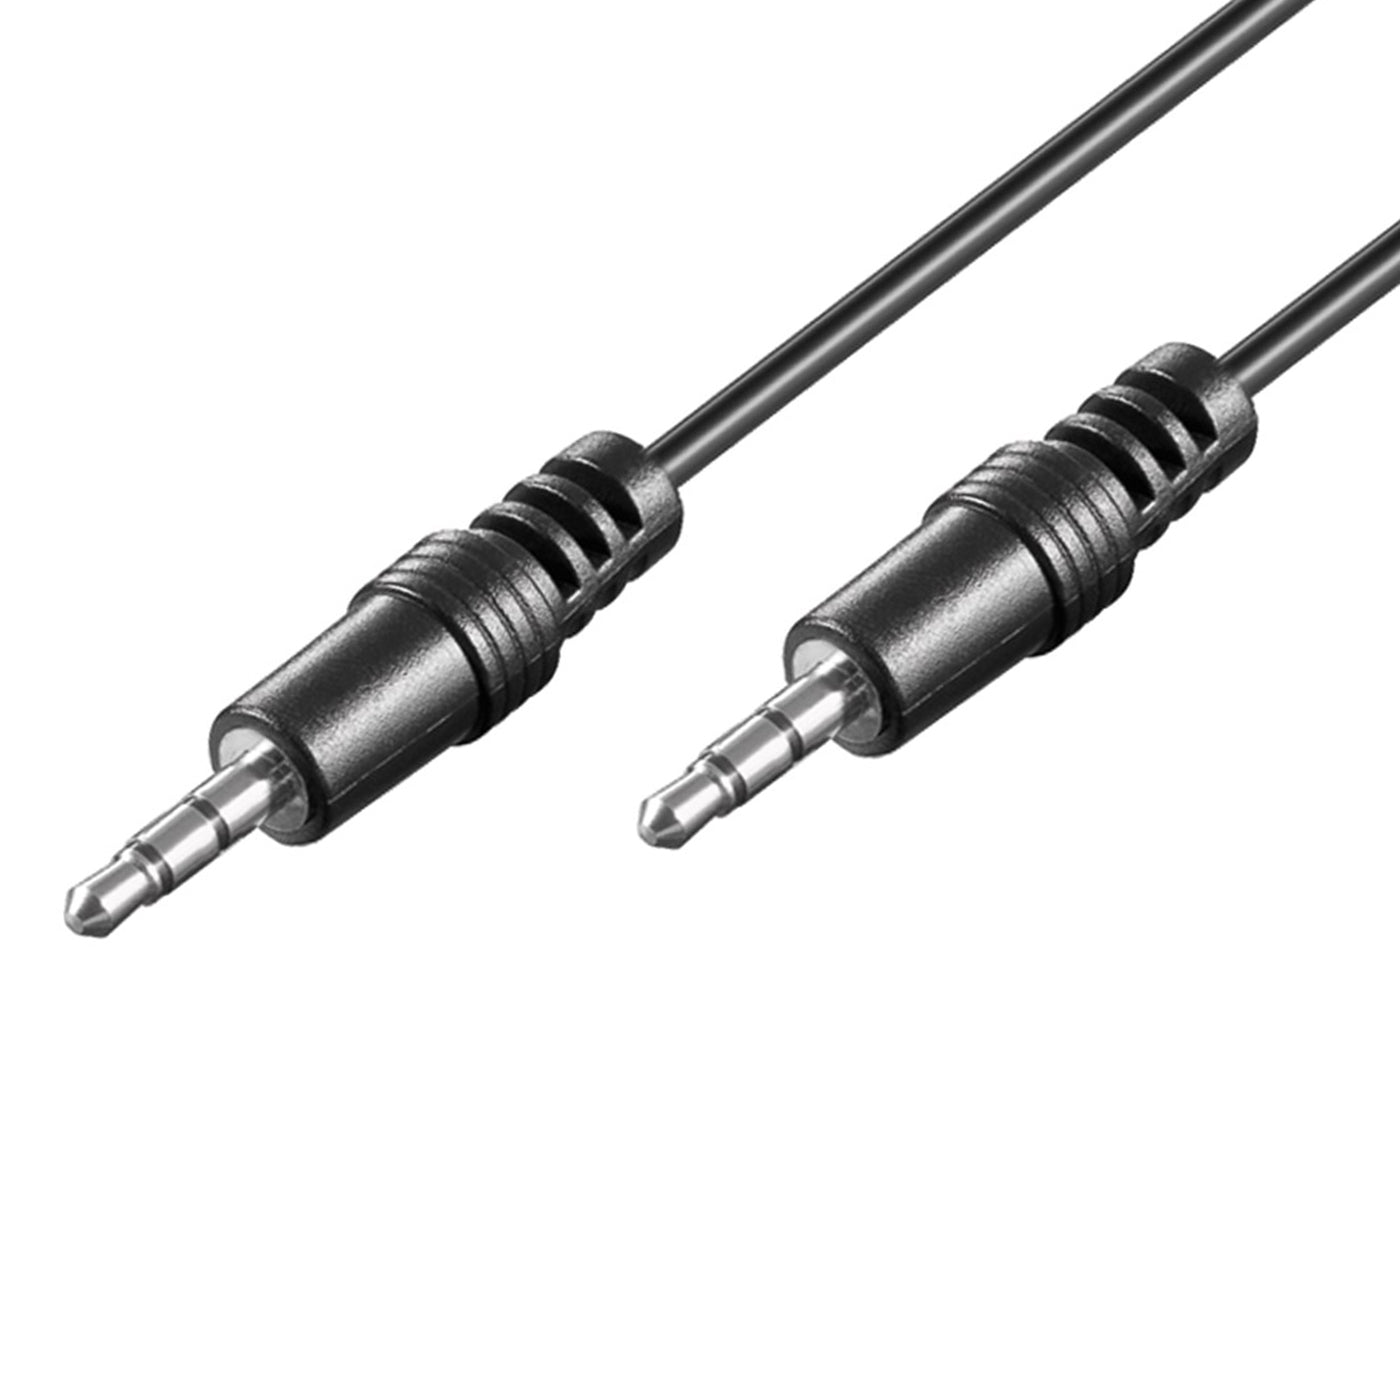 Audio Verbindungskabel 2,5m Klinke 3,5mm AUX Stereo Kupfer Audio Kopfhörer Kabel